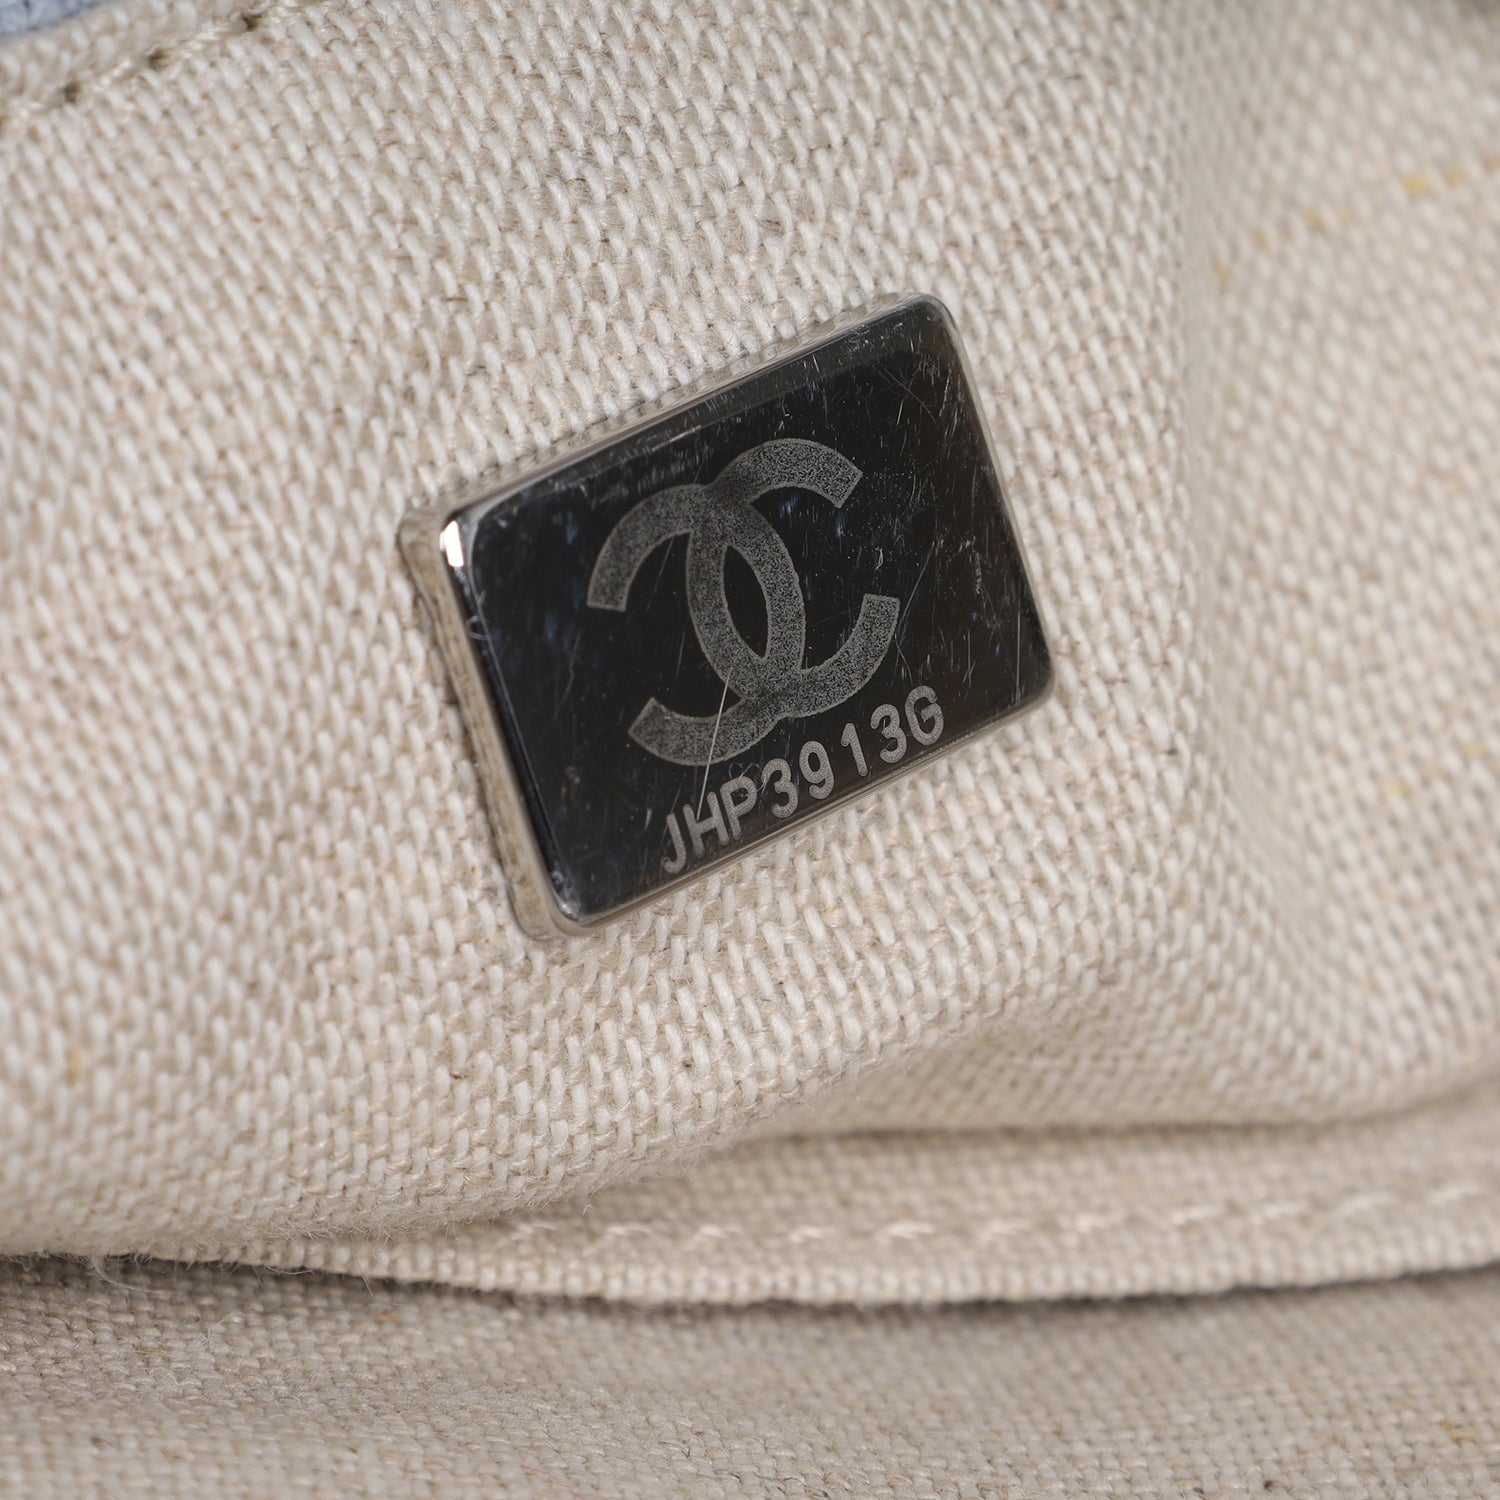 Chanel Womens CC Medium Deauville Tote Shoulder Handbag Beige